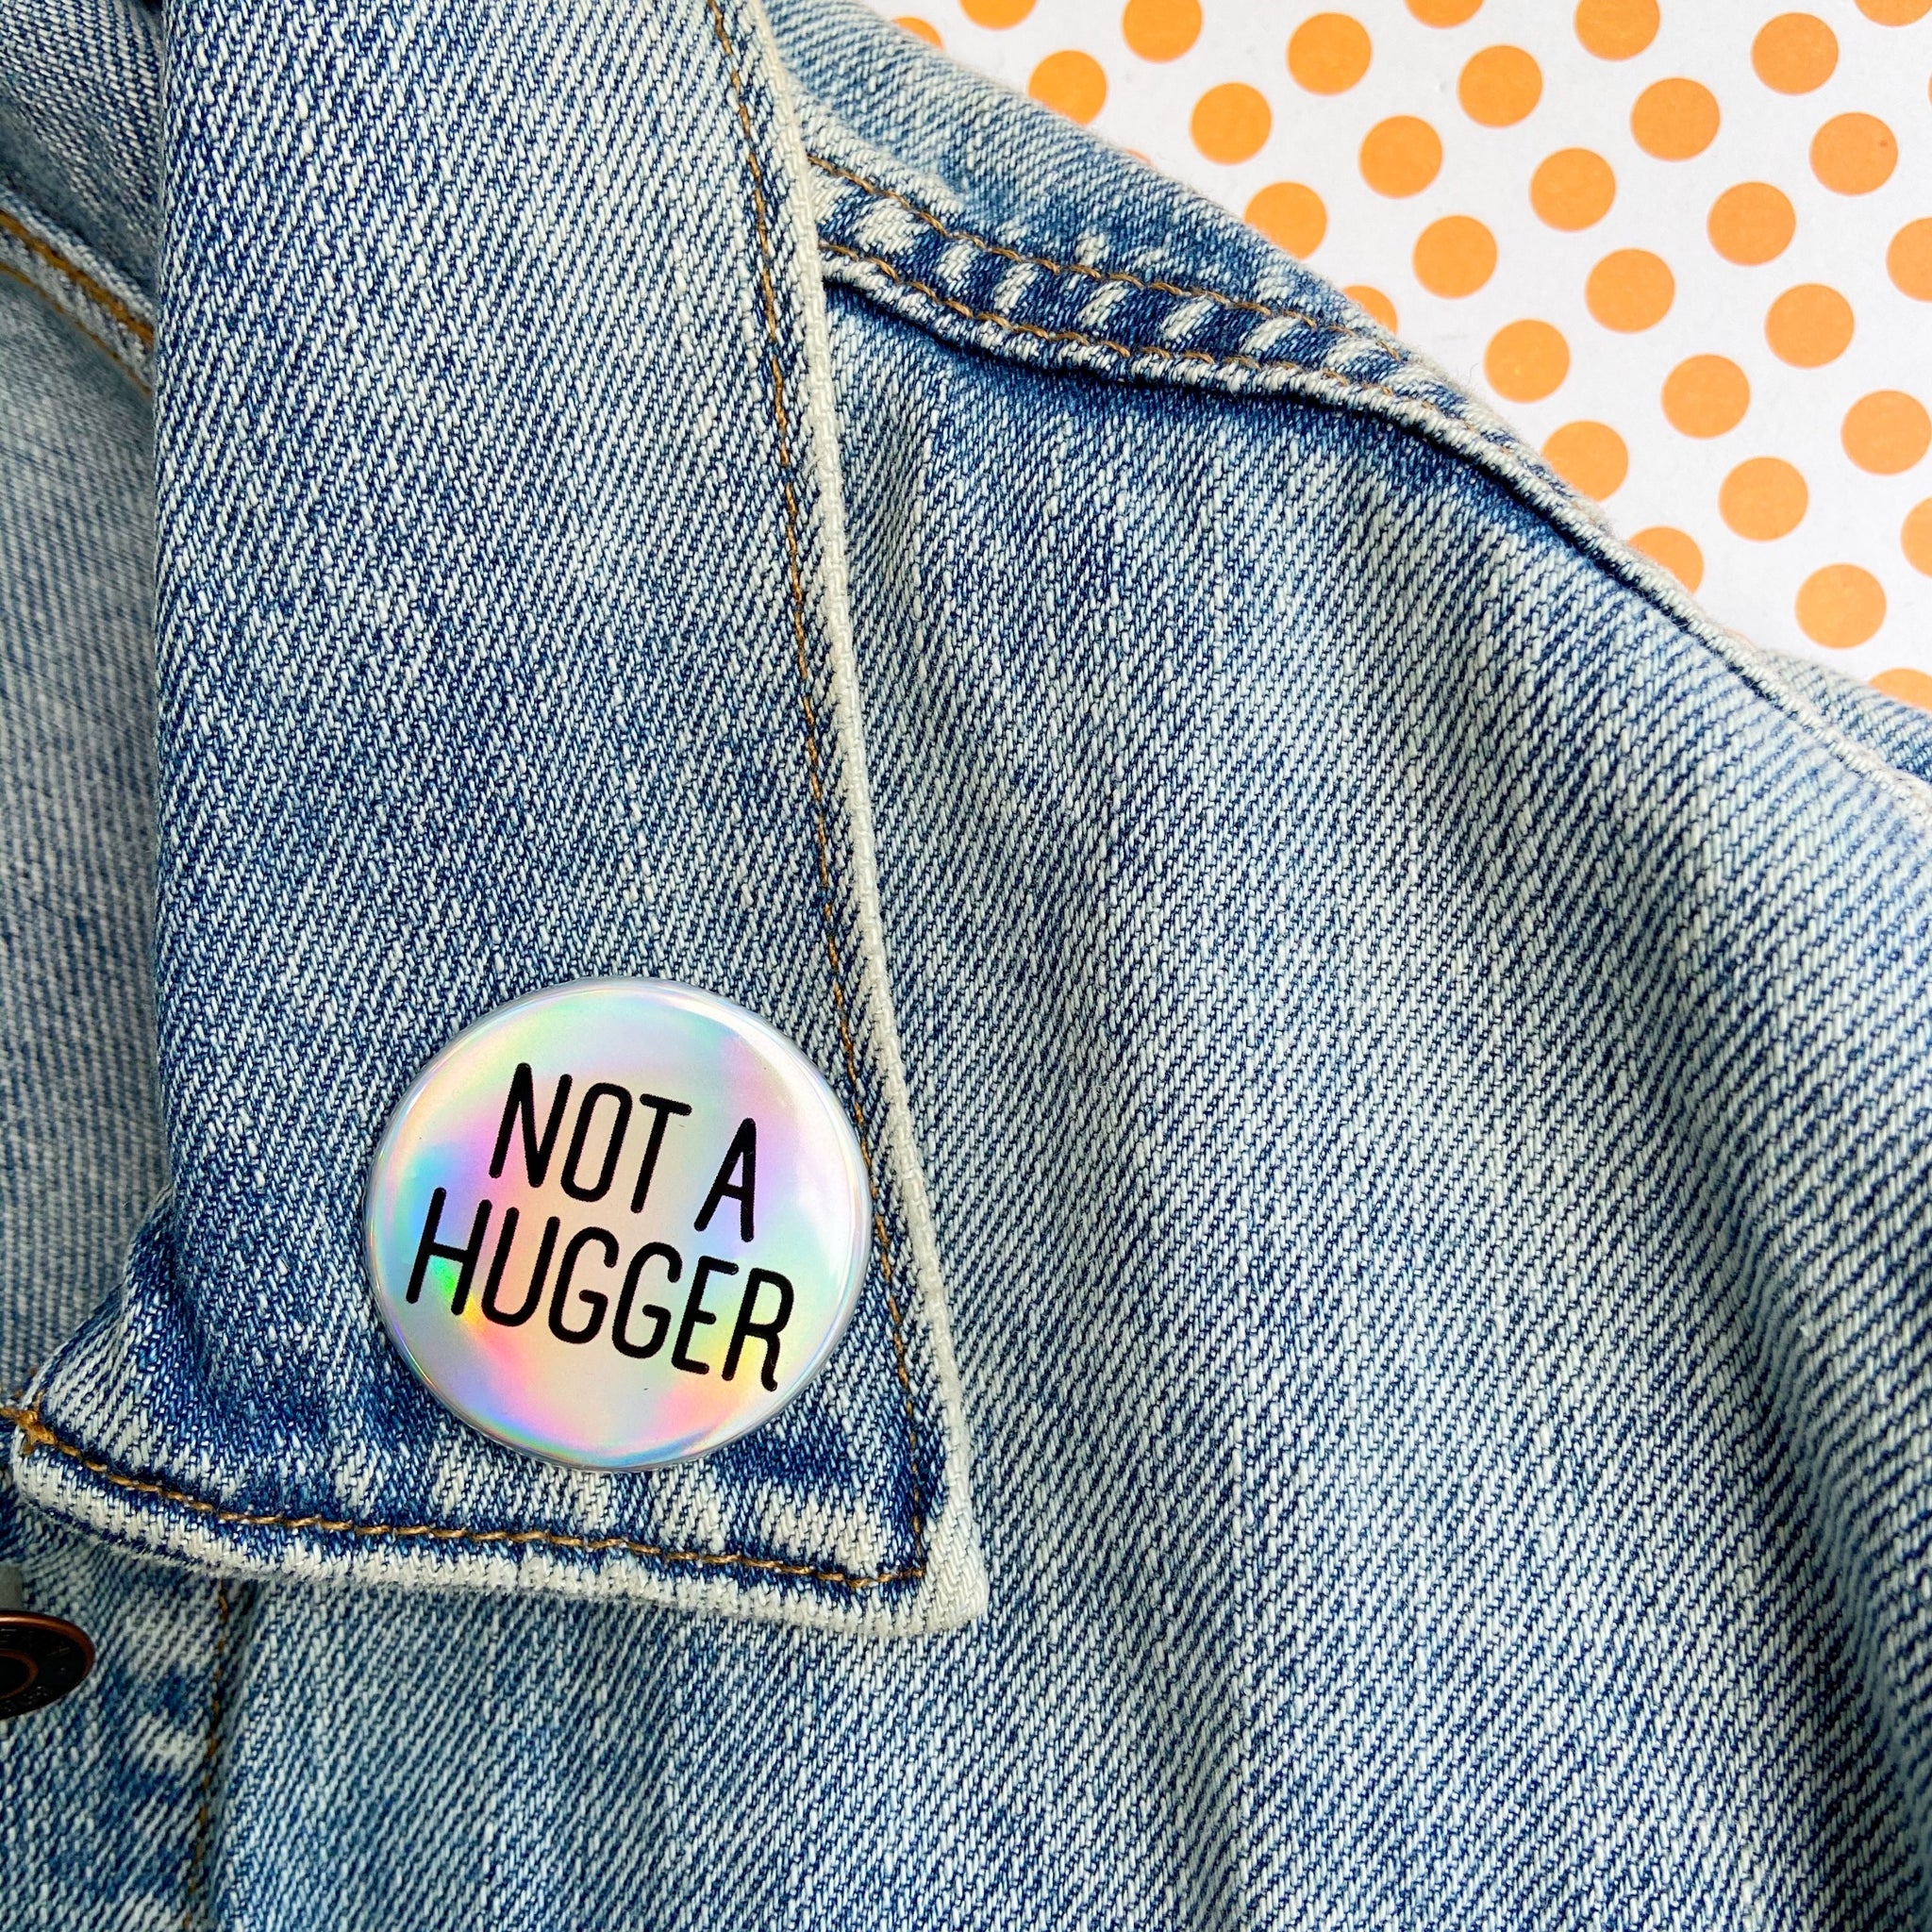 Not A Hugger Holo Rainbow Button Badge